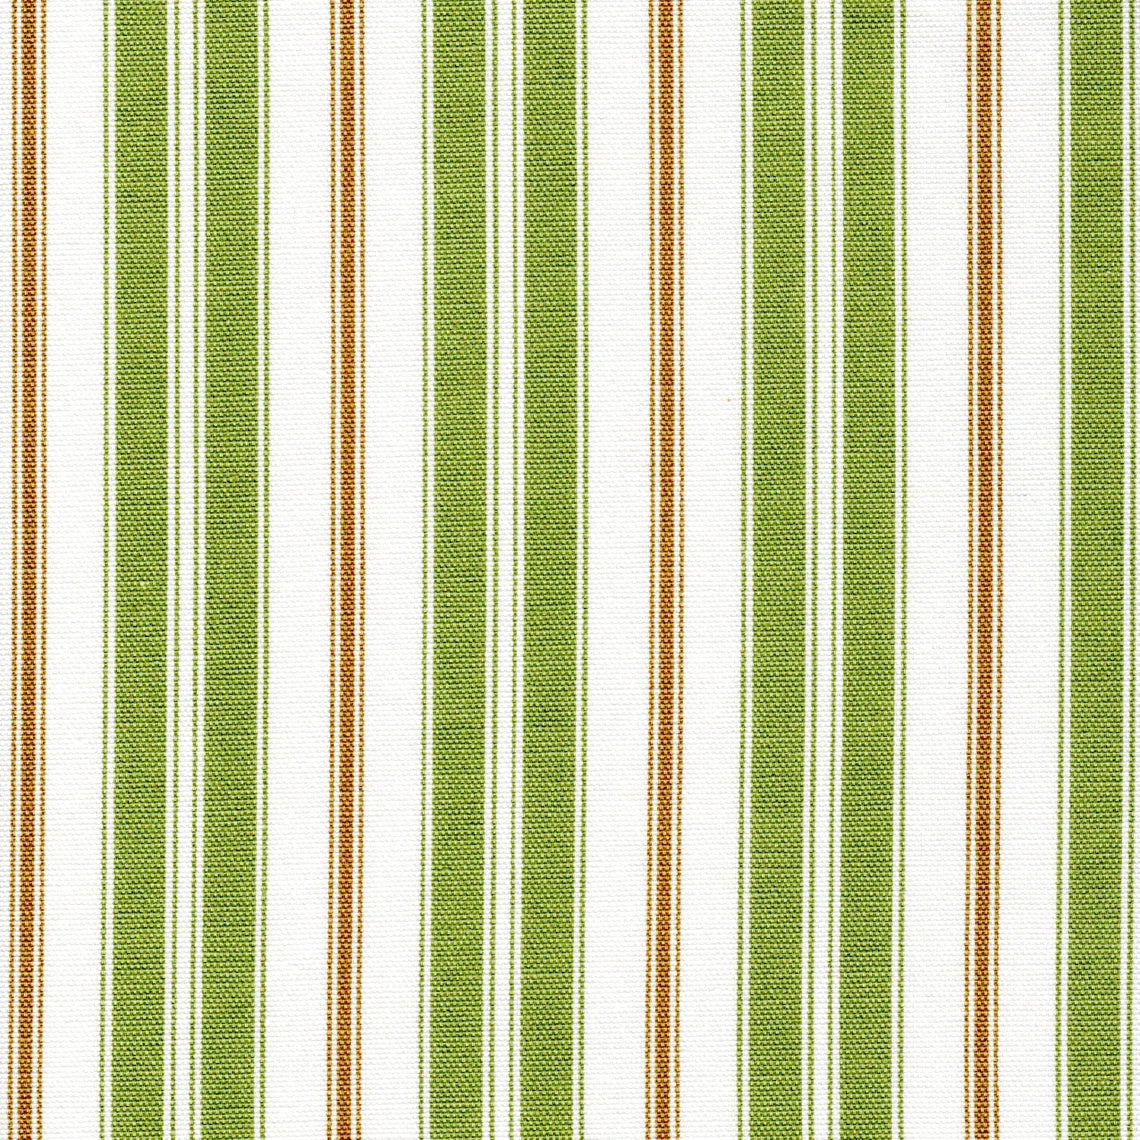 tie-up valance in newbury aloe green stripe- green, brown, white